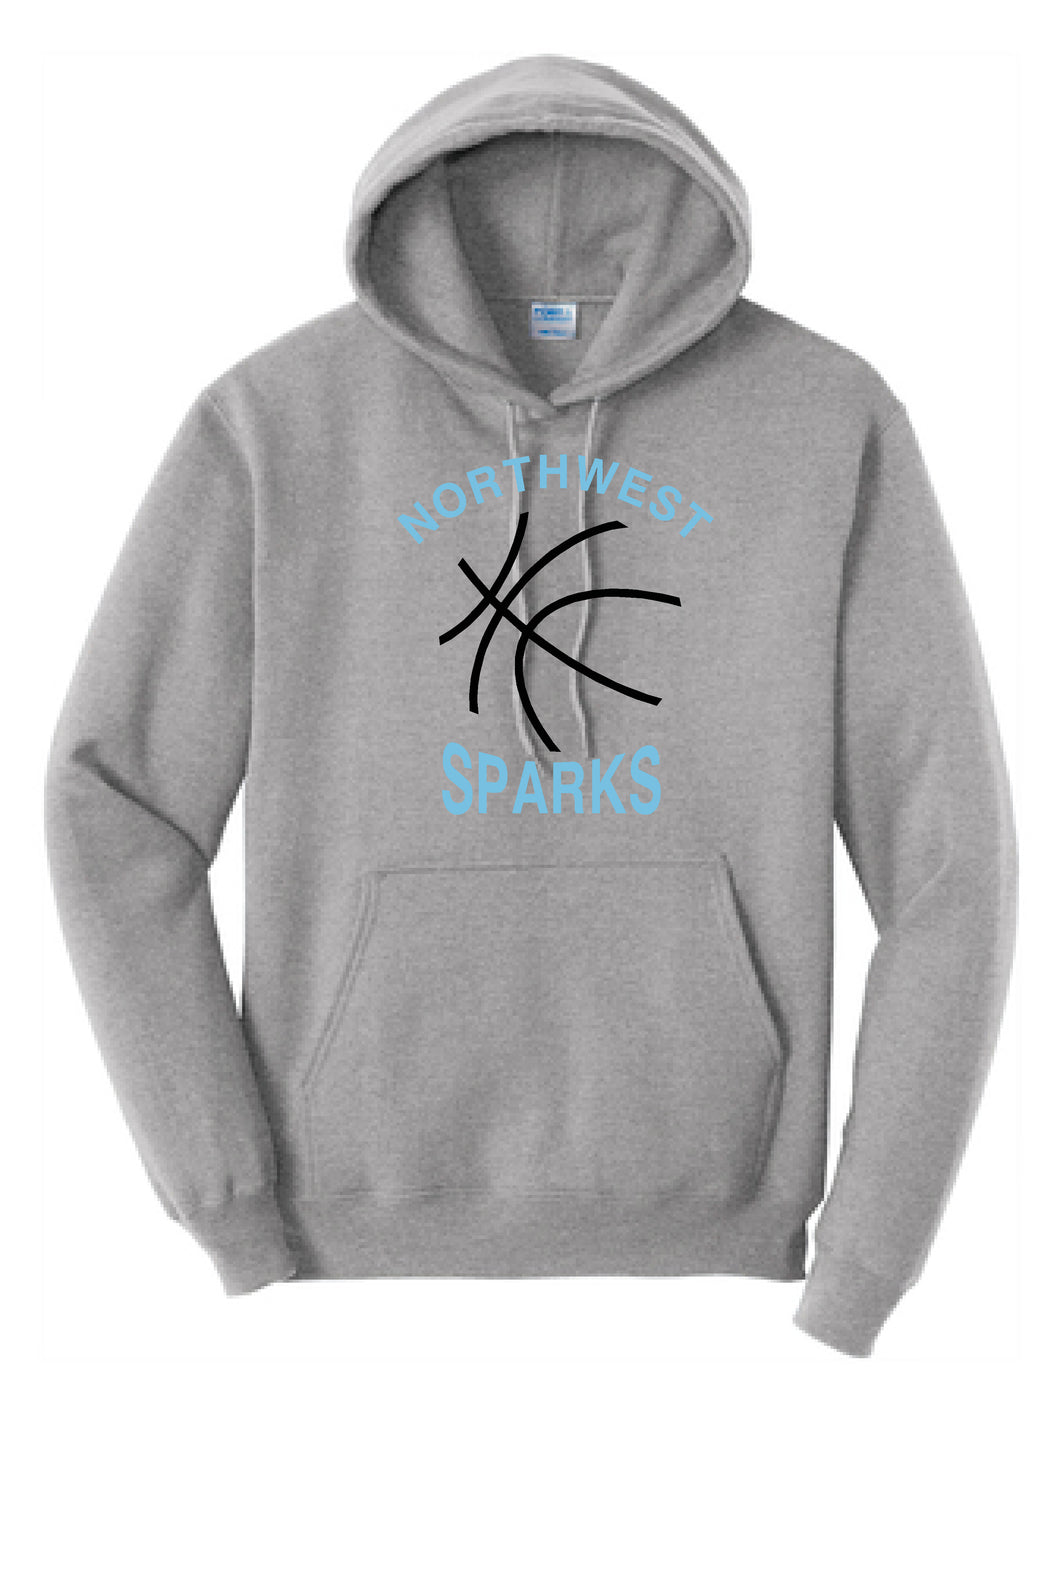 Northwest Sparks Basketball Hooded Sweatshirt